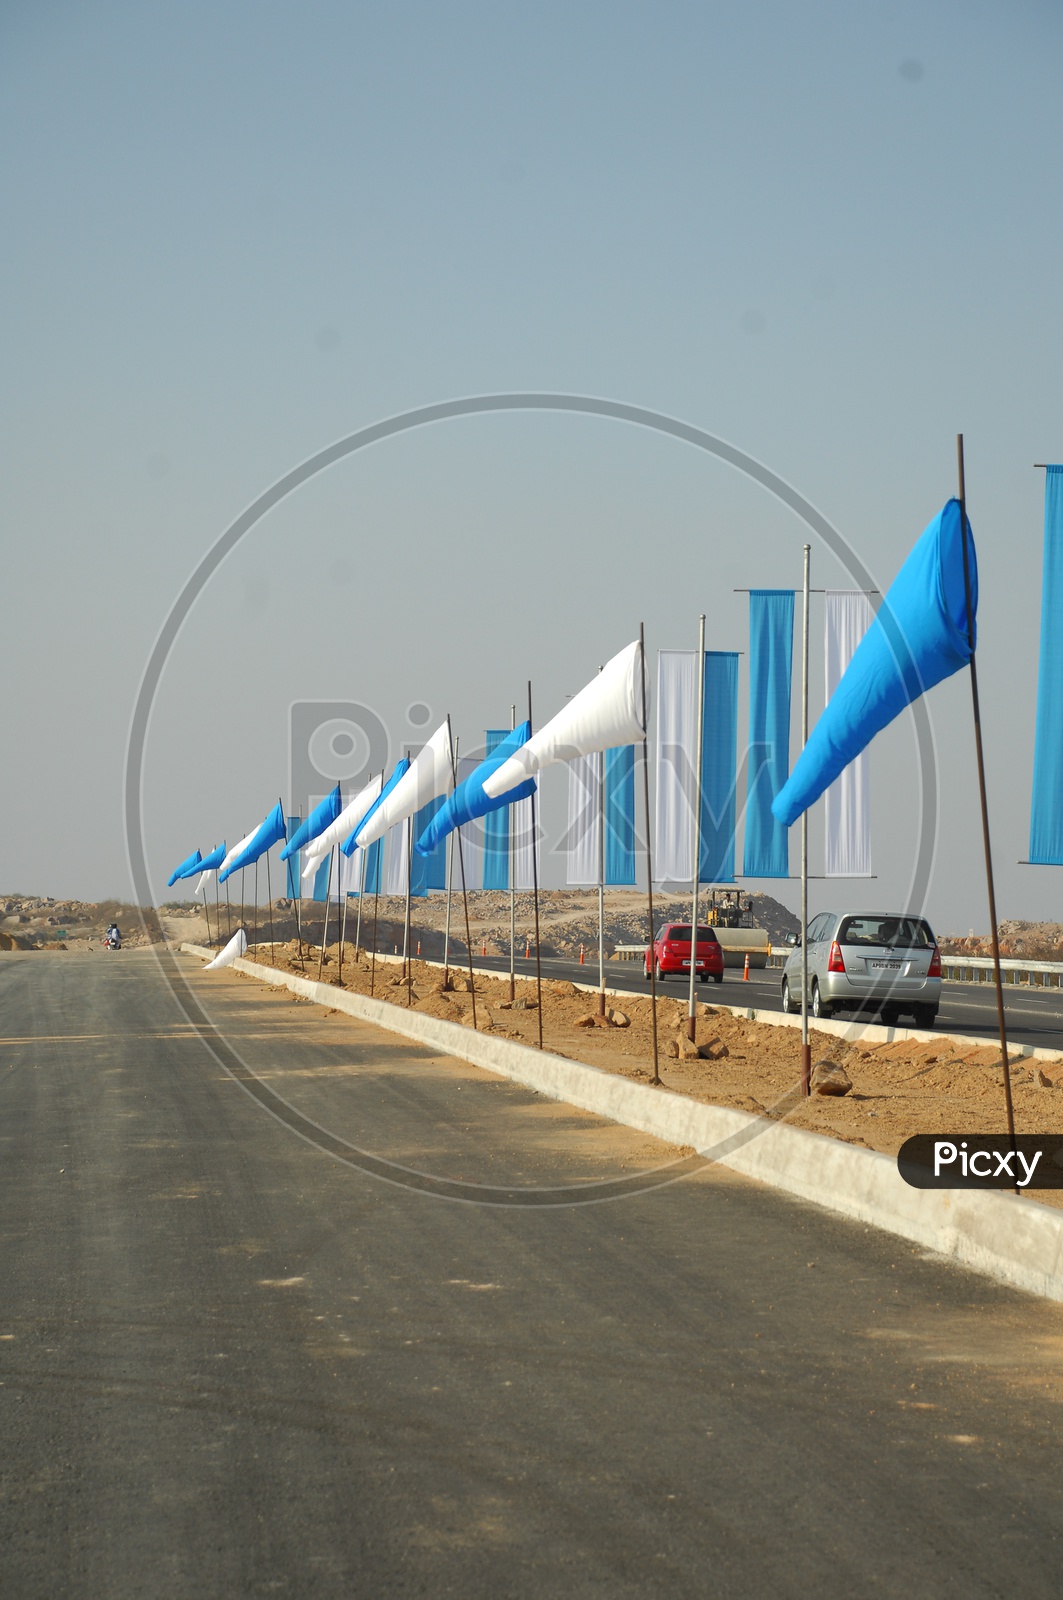 Flags alongside the road